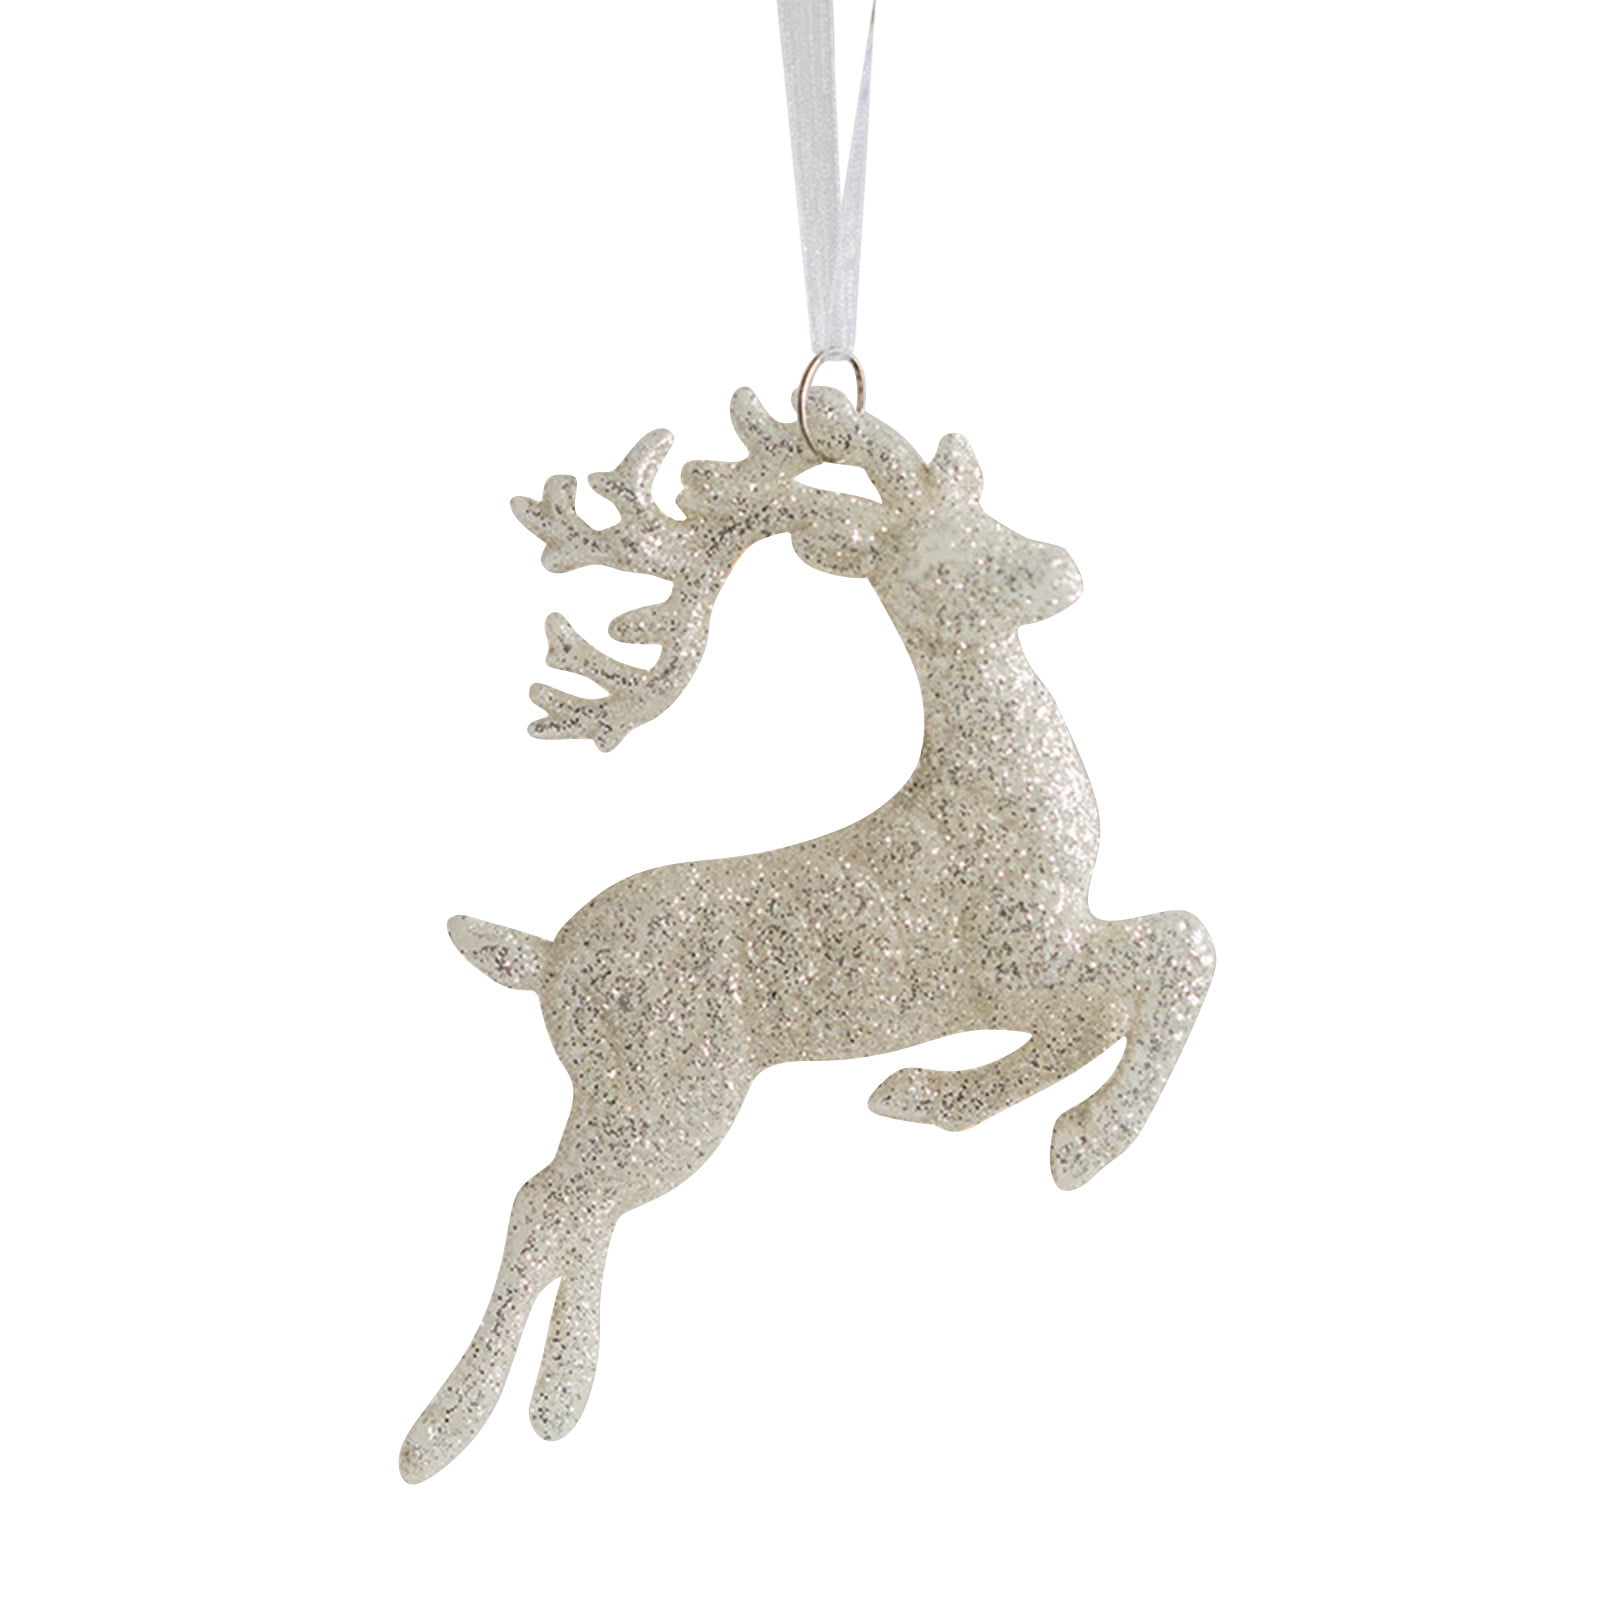 SDJMa Christmas Reindeer Ornament, Glitter Silver Deer Hanging ...